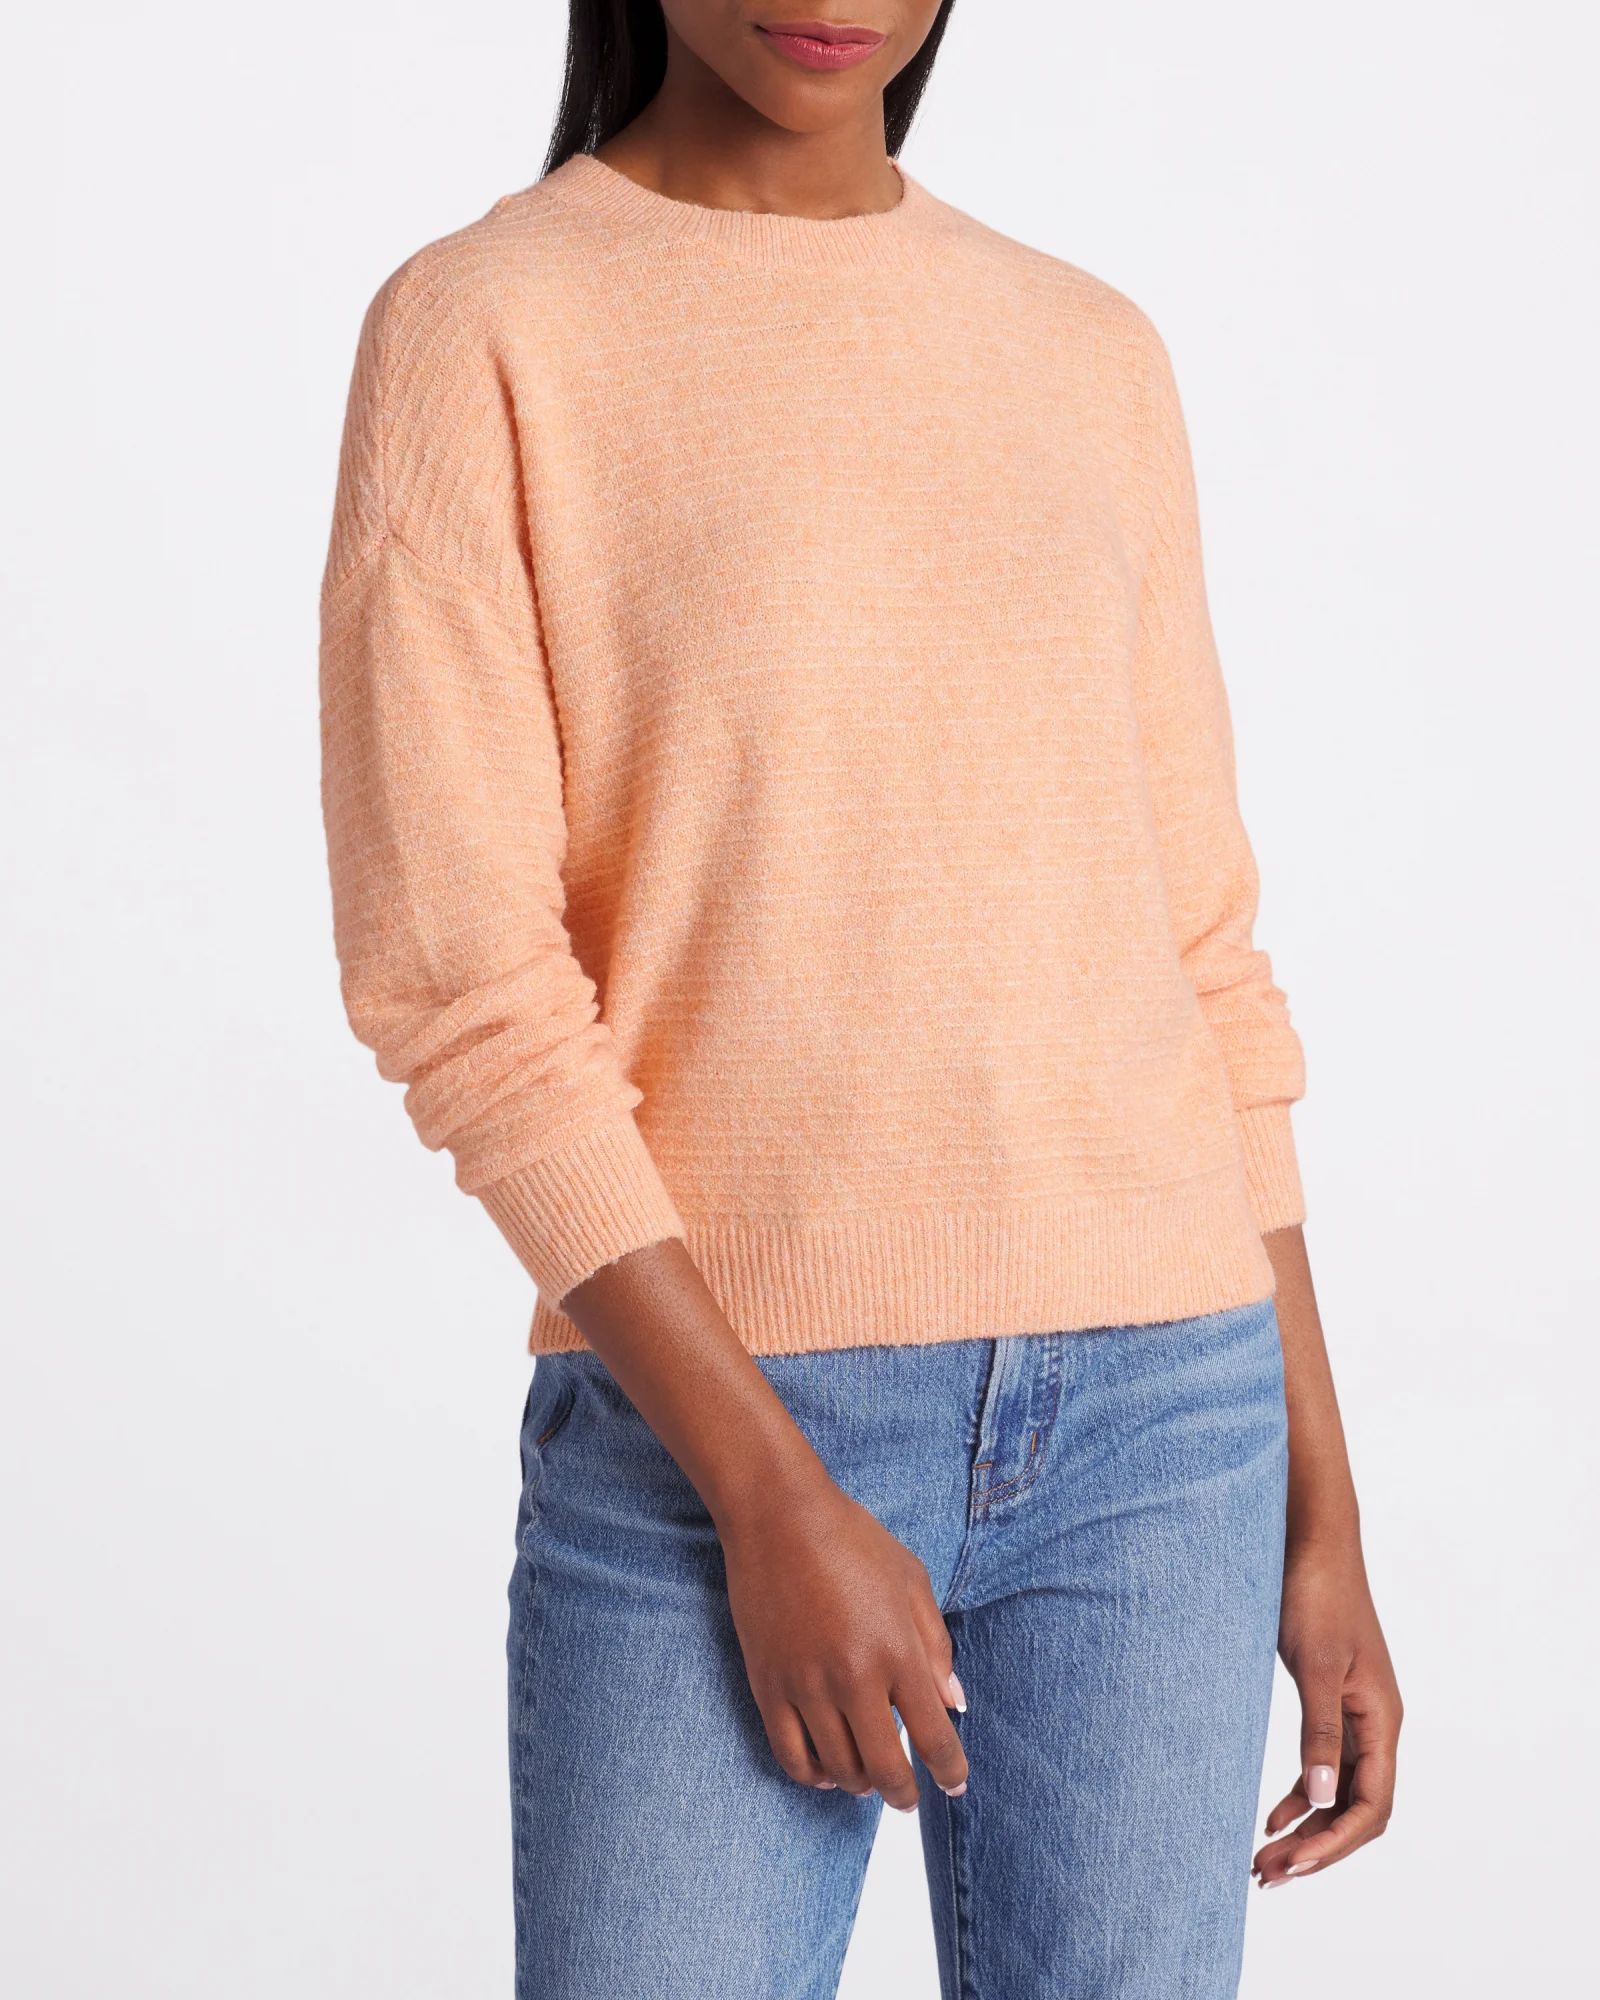 Sadella Textured Crewneck Sweater | Stitch Fix